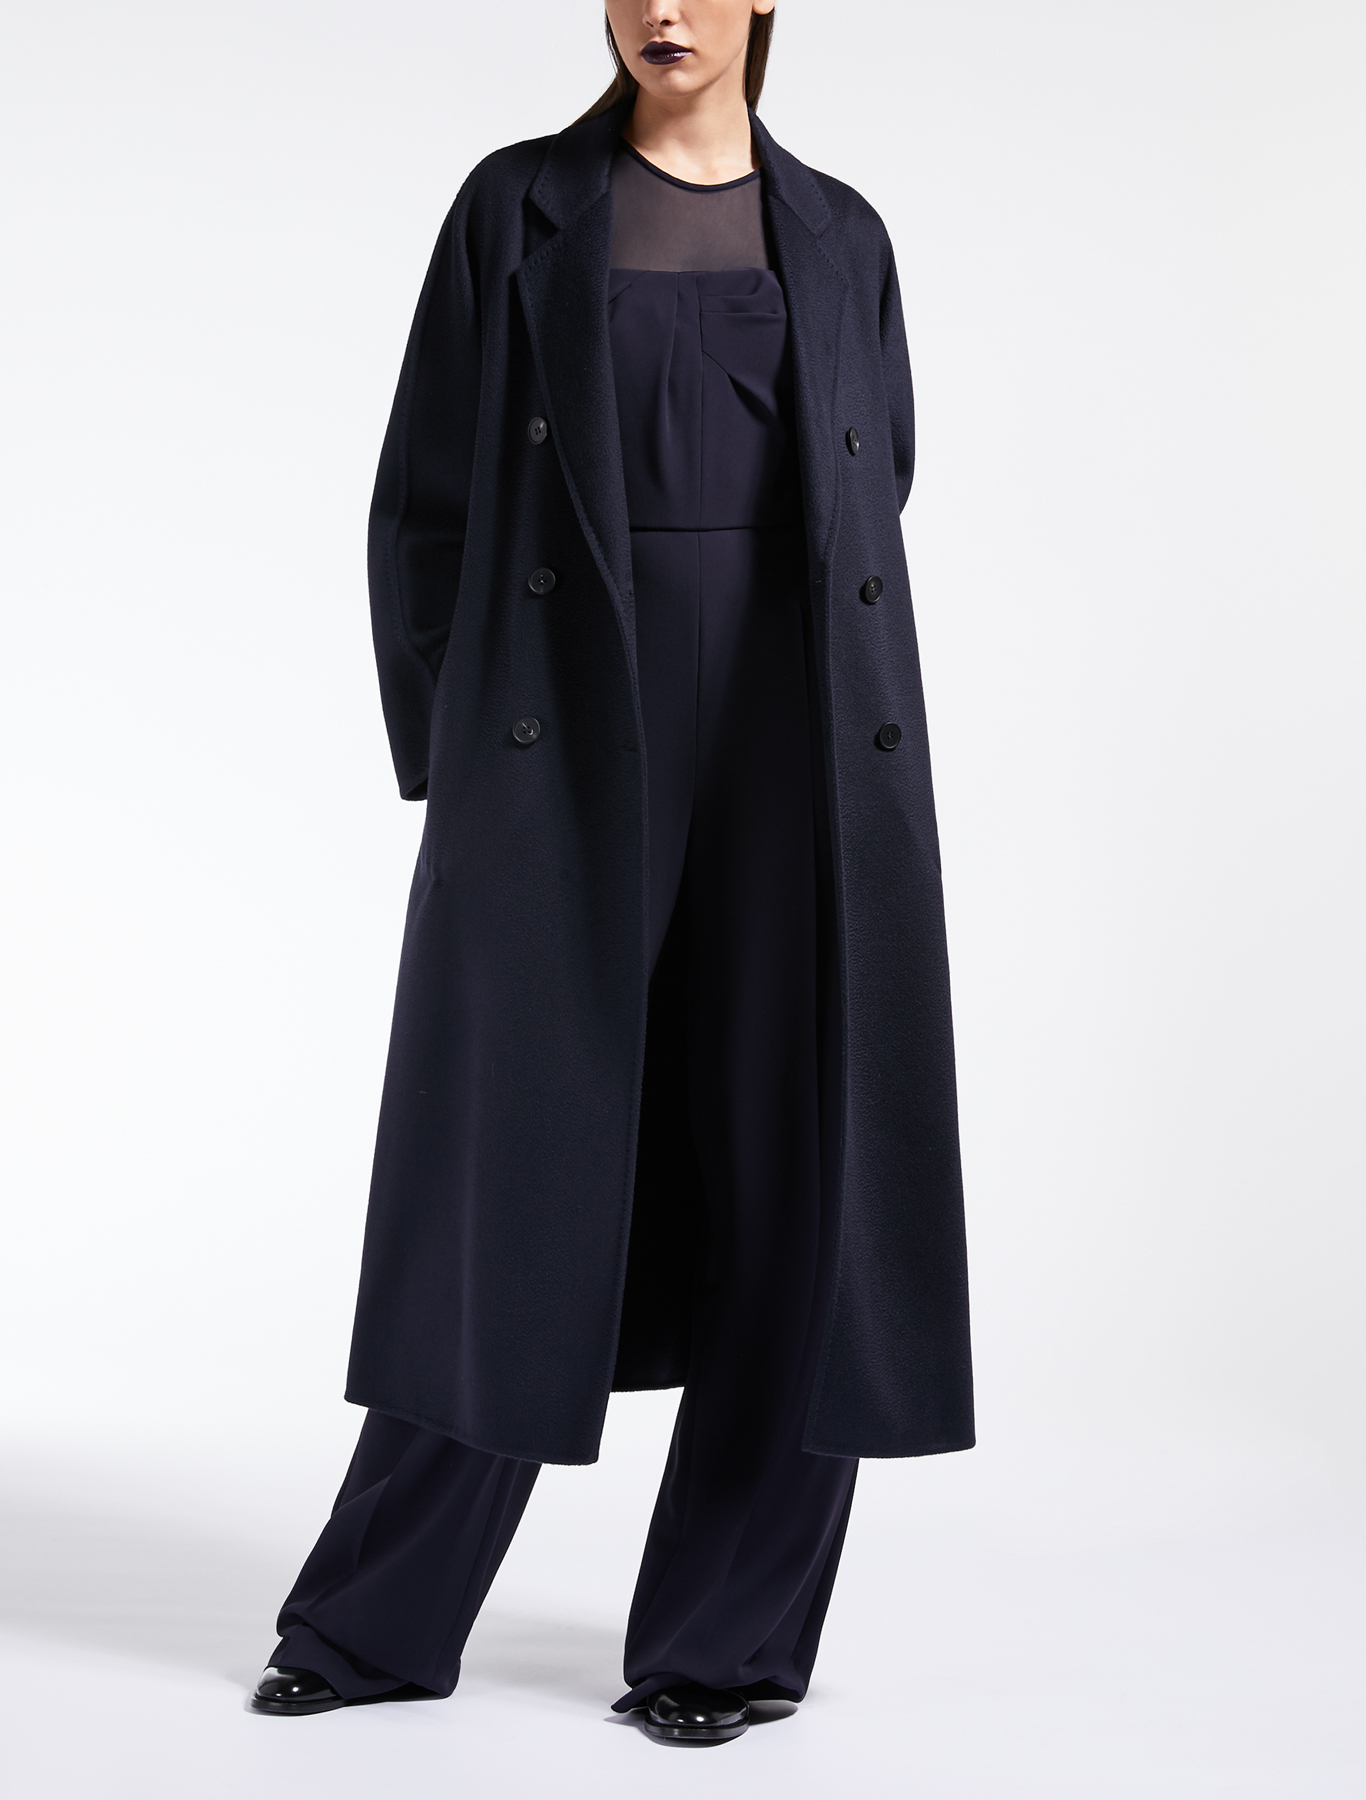 Max Mara Cashmere Winter Coats: Fashion Forward Options You'll Love